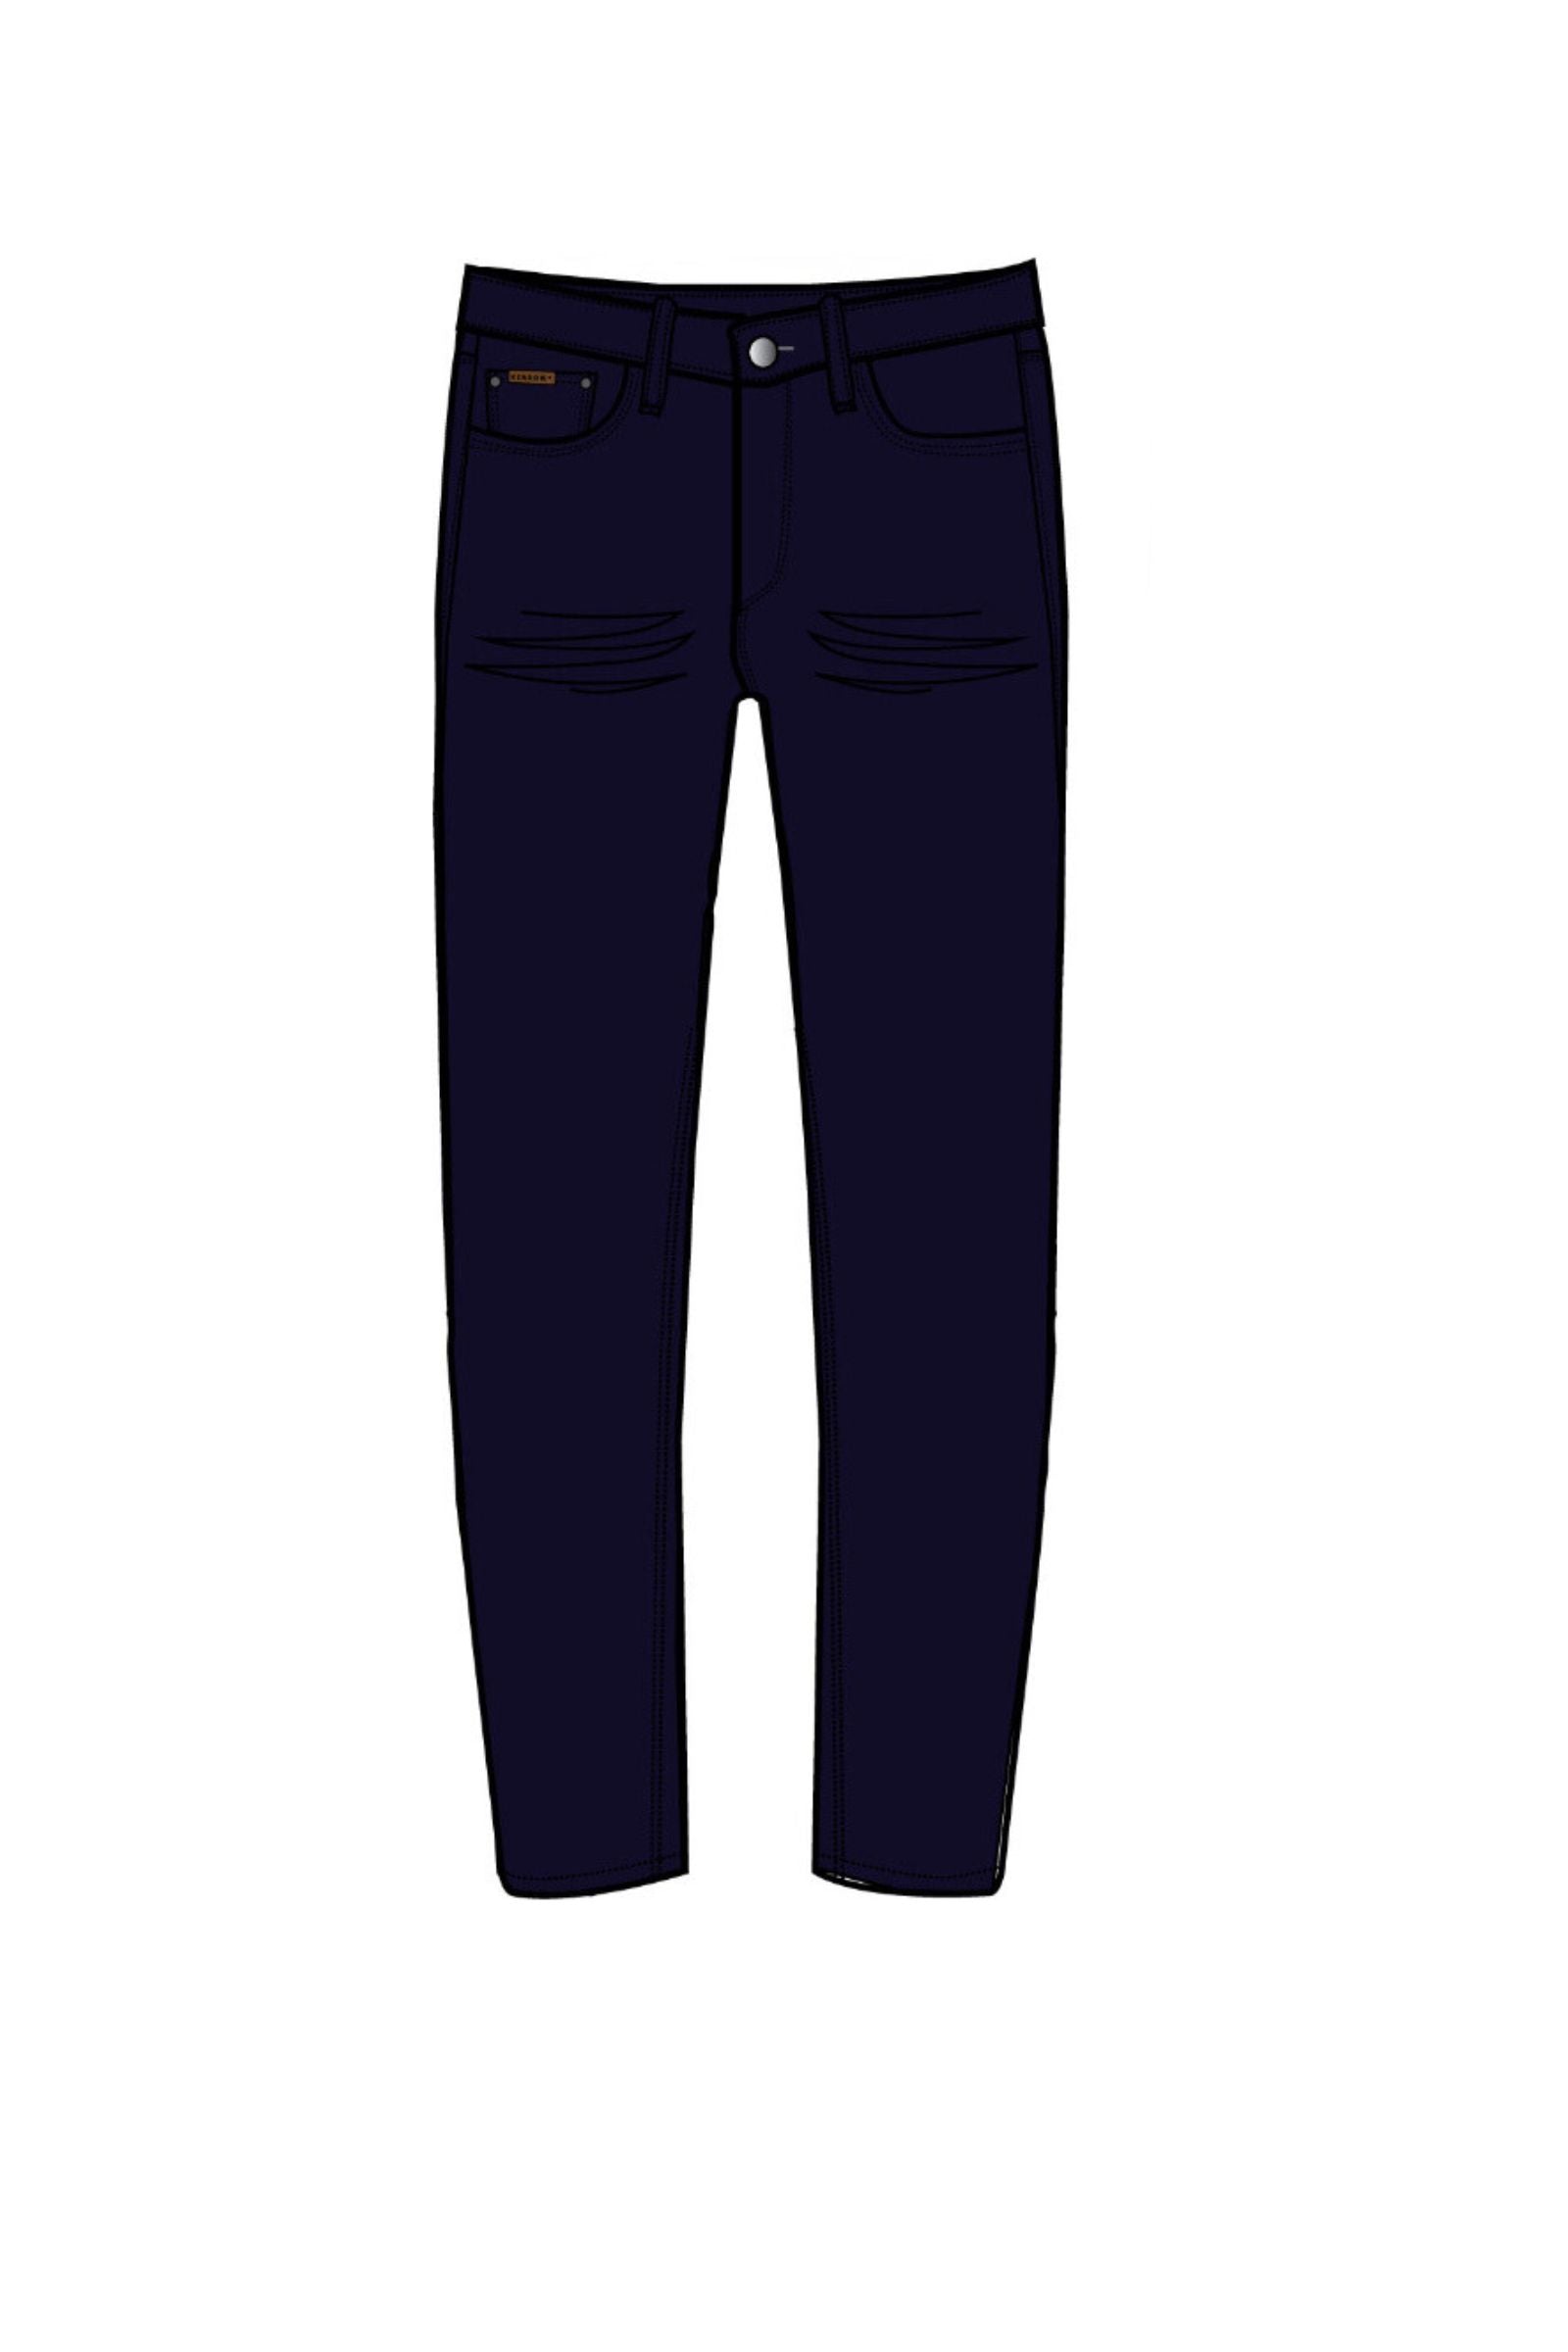 Boy's Torey Junior Jeans - Navy-Front View